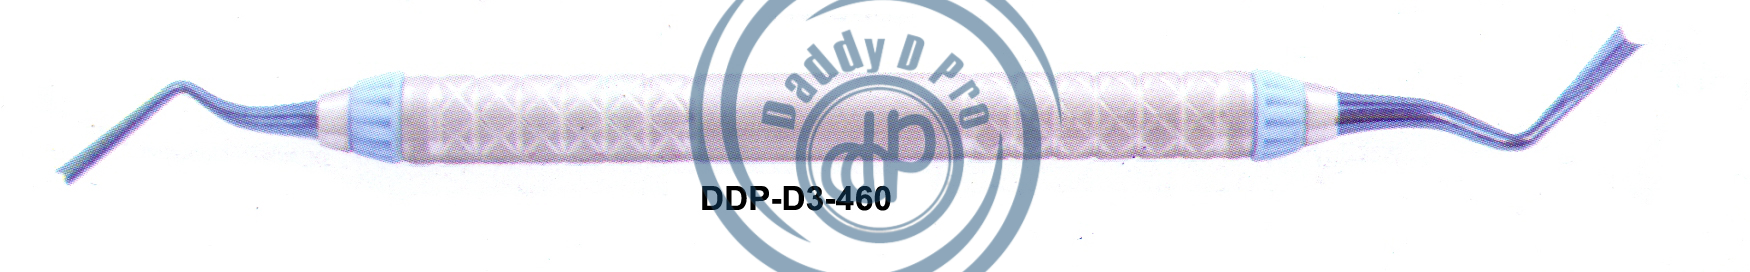 images/DDP-D3-460.png